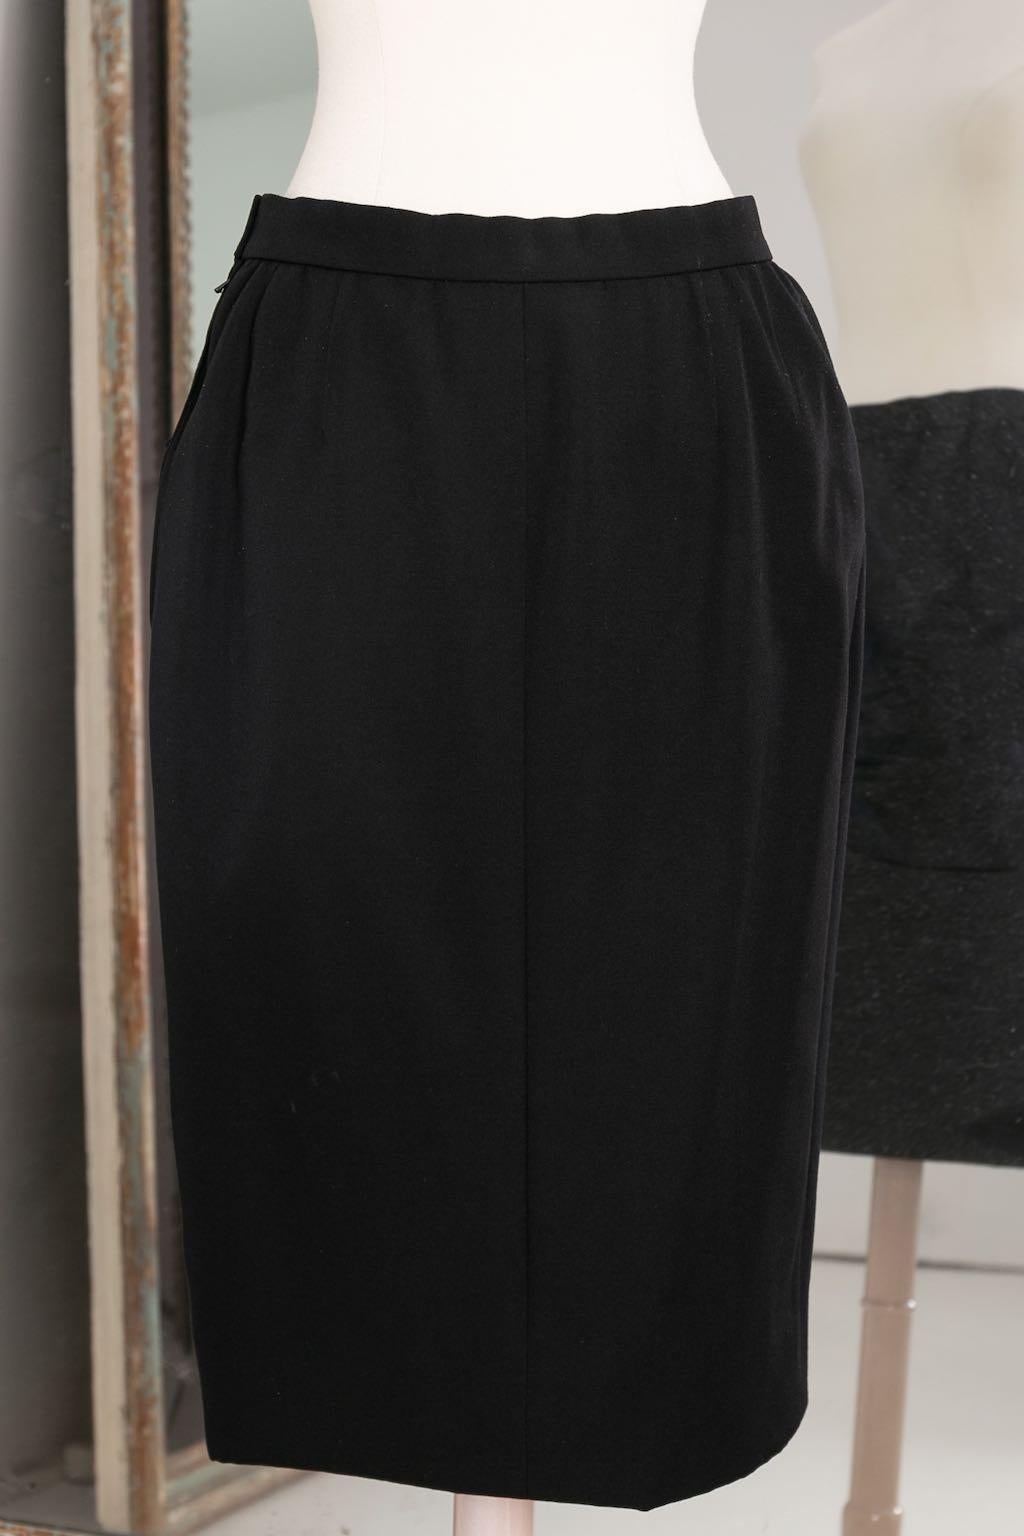 Yves Saint Laurent Haute Couture Black Skirt and Jacket Set, circa 1981/1982 5